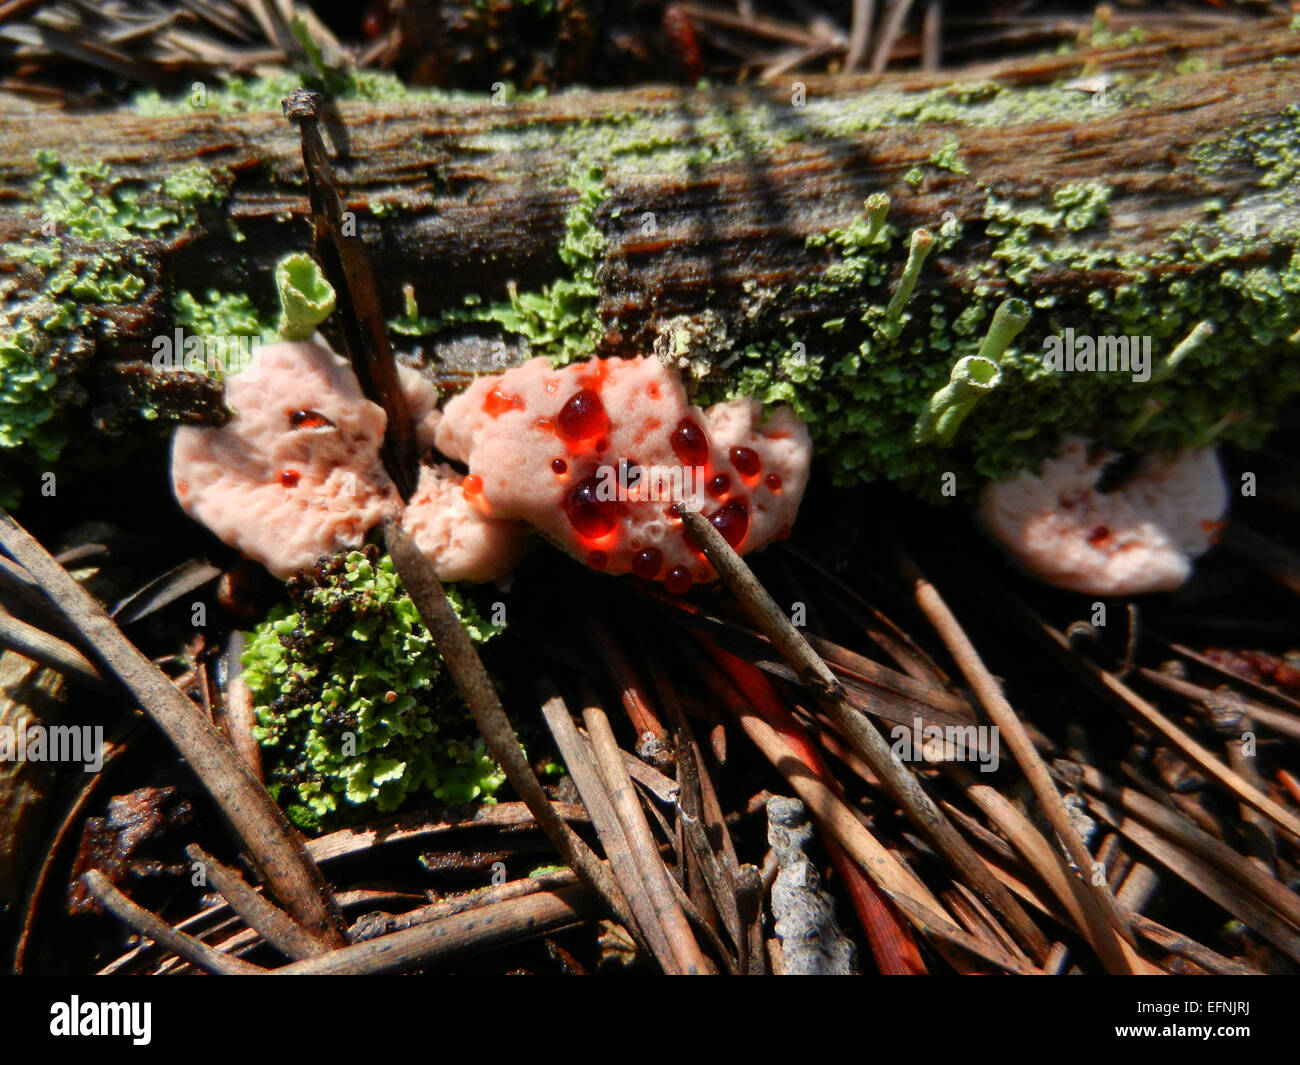 Bleeding tooth fungus Bleeding tooth fungus (Hydnellum peckii) in the woods near Norris; Curtis Akin; August 2014; Catalog #1954d; Original #DSCN3112 Stock Photo